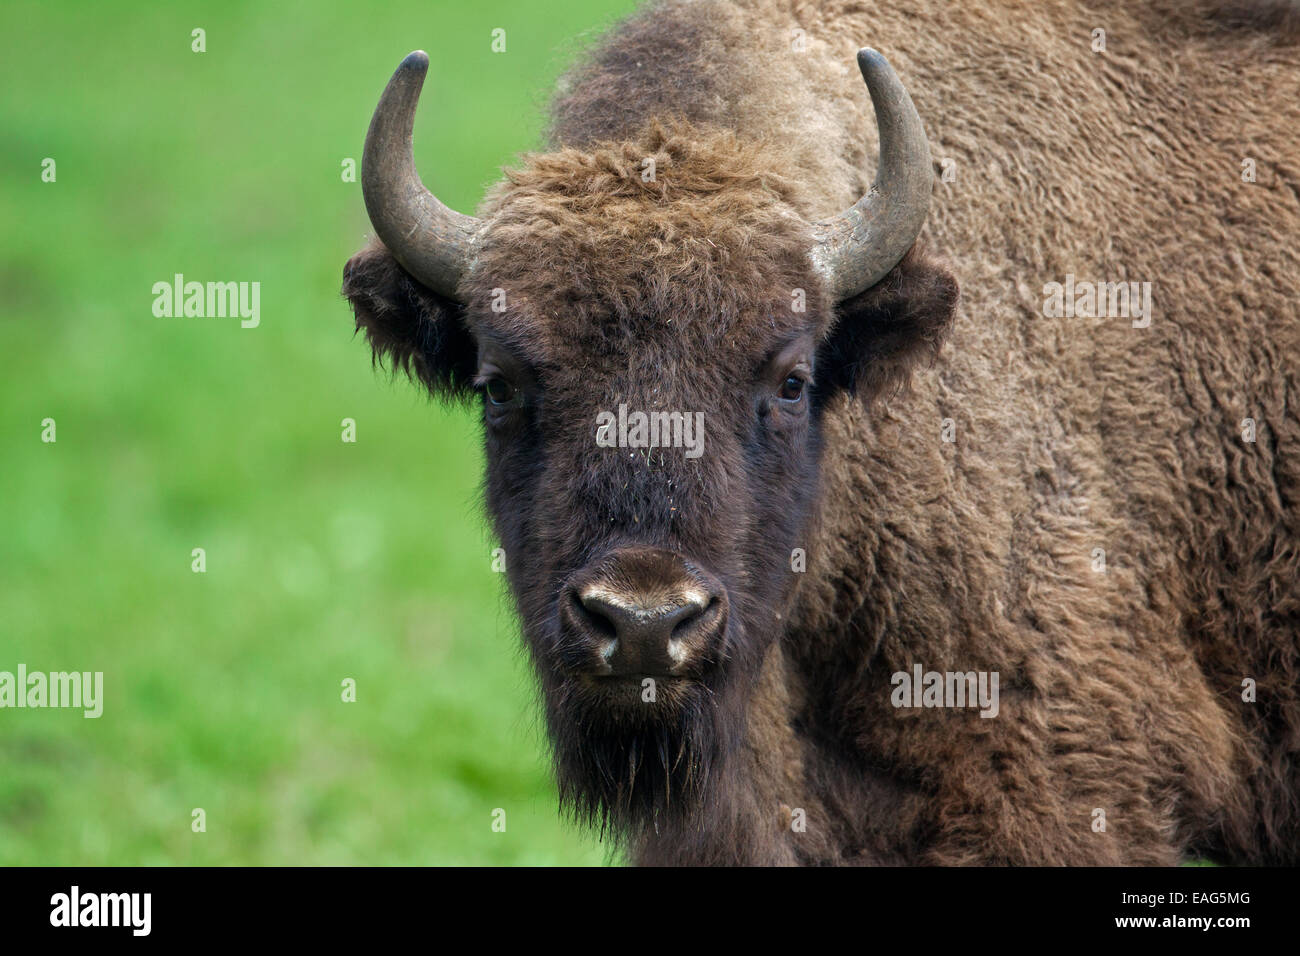 European bison / wisent (Bison bonasus) close up portrait Stock Photo